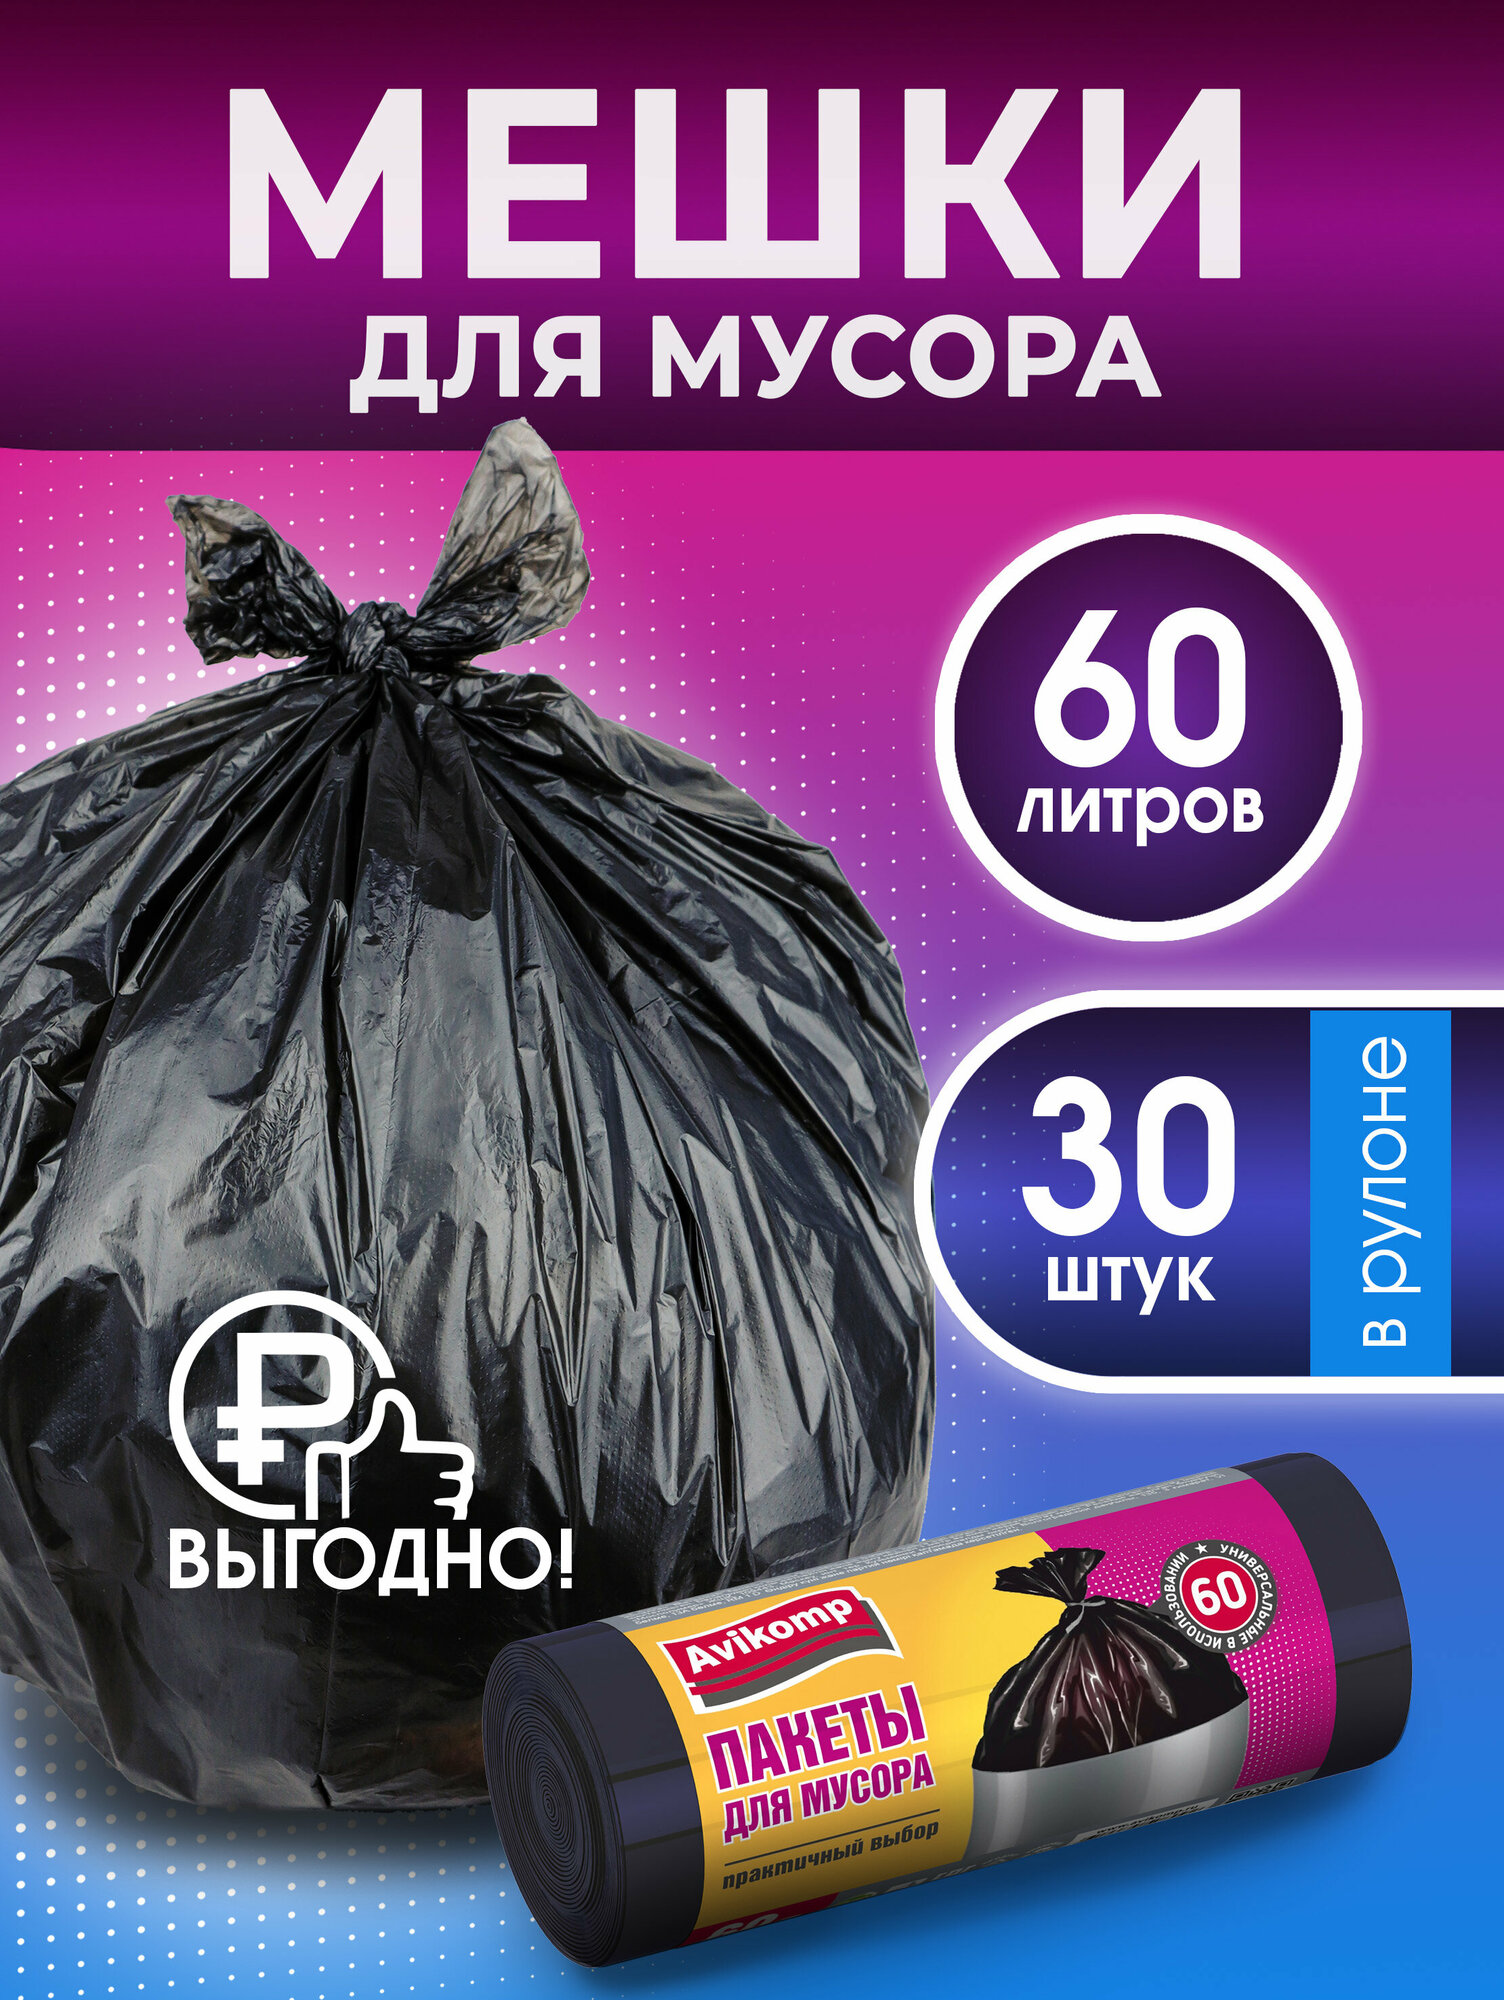 Пакеты для мусора, Avikomp, 60л, 30шт, рулон, черные